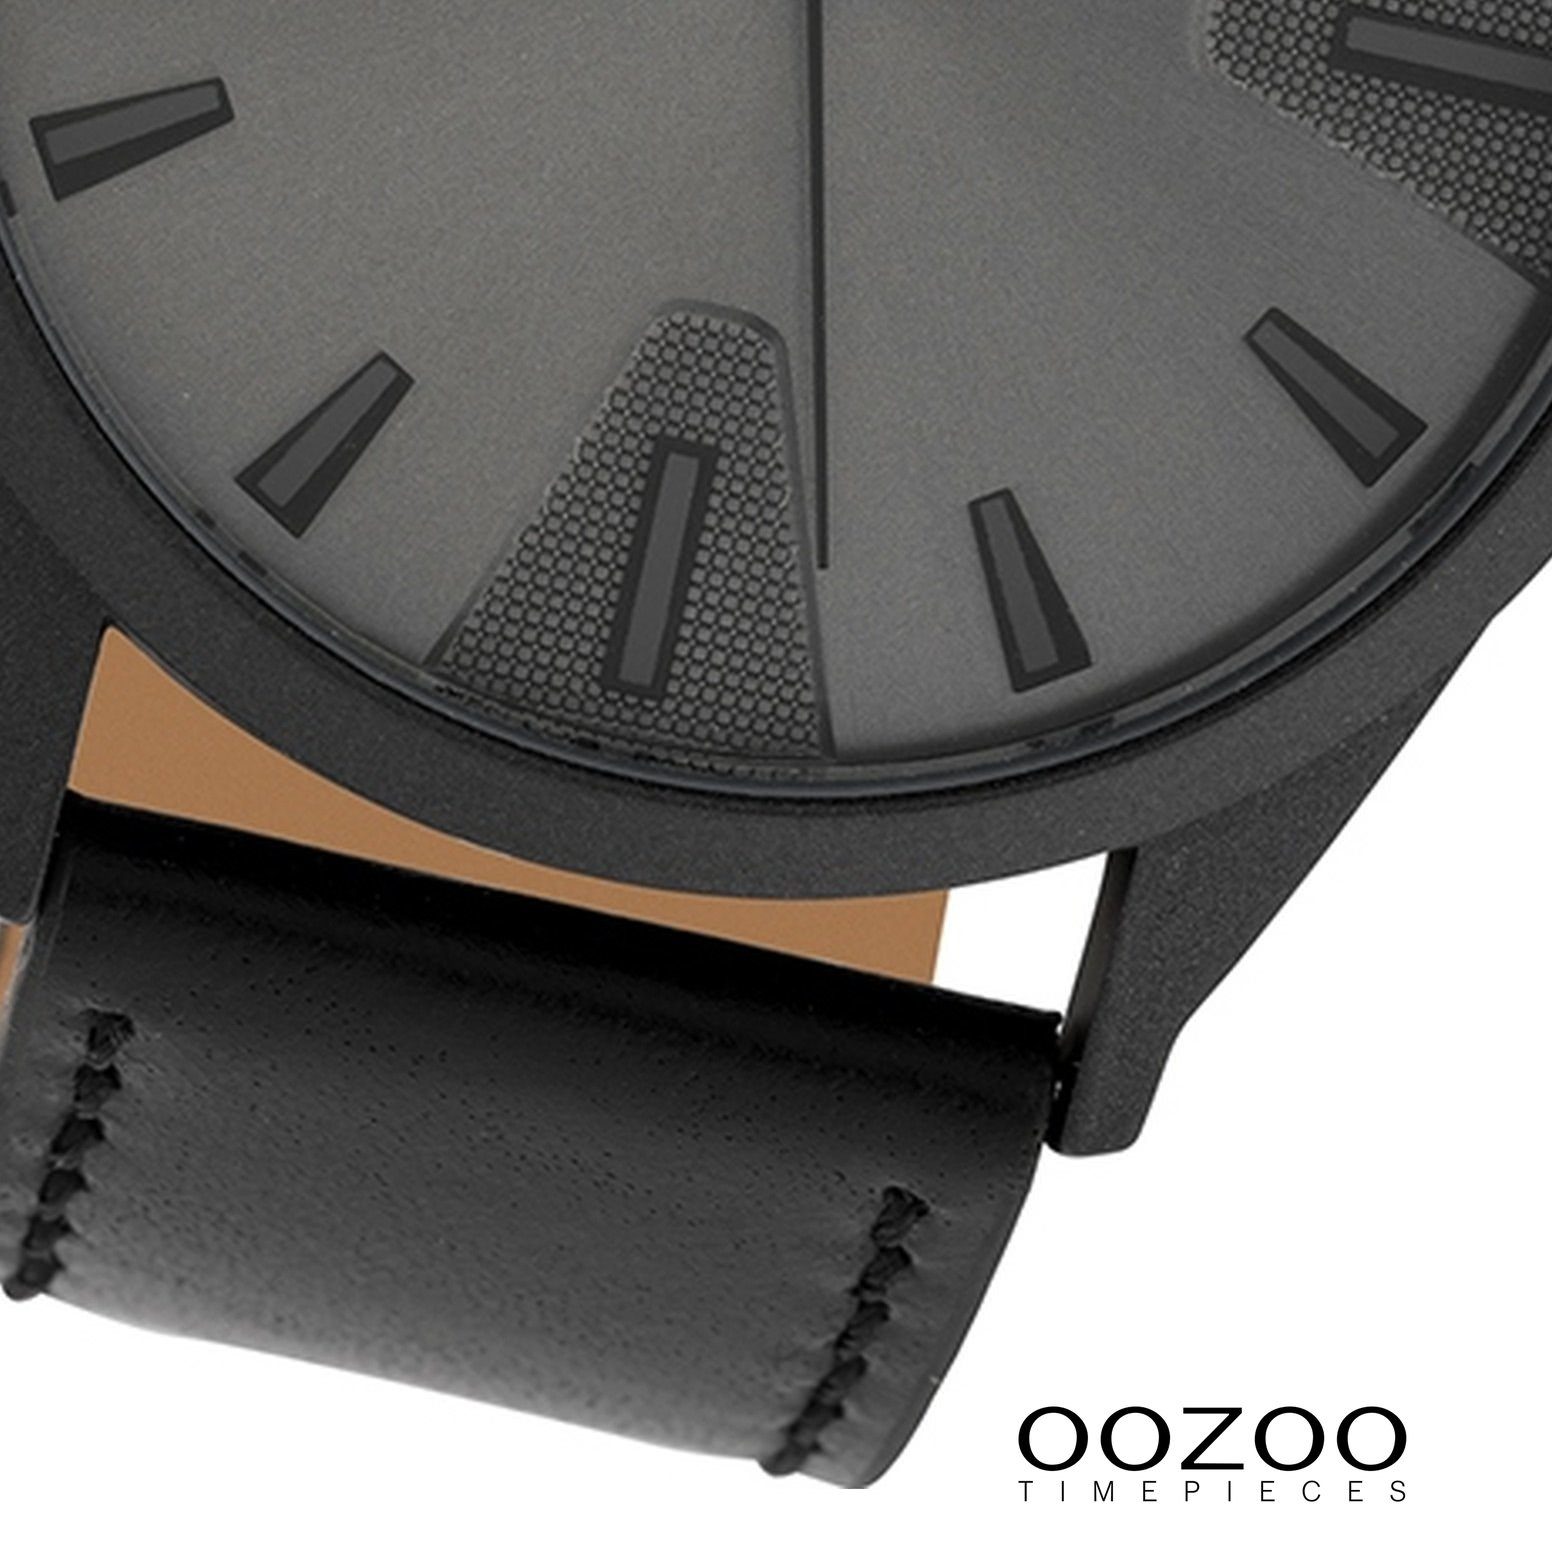 OOZOO Quarzuhr Oozoo groß Herrenuhr Fashion-Style Armbanduhr, rund, (ca. 45mm) Herren Lederarmband